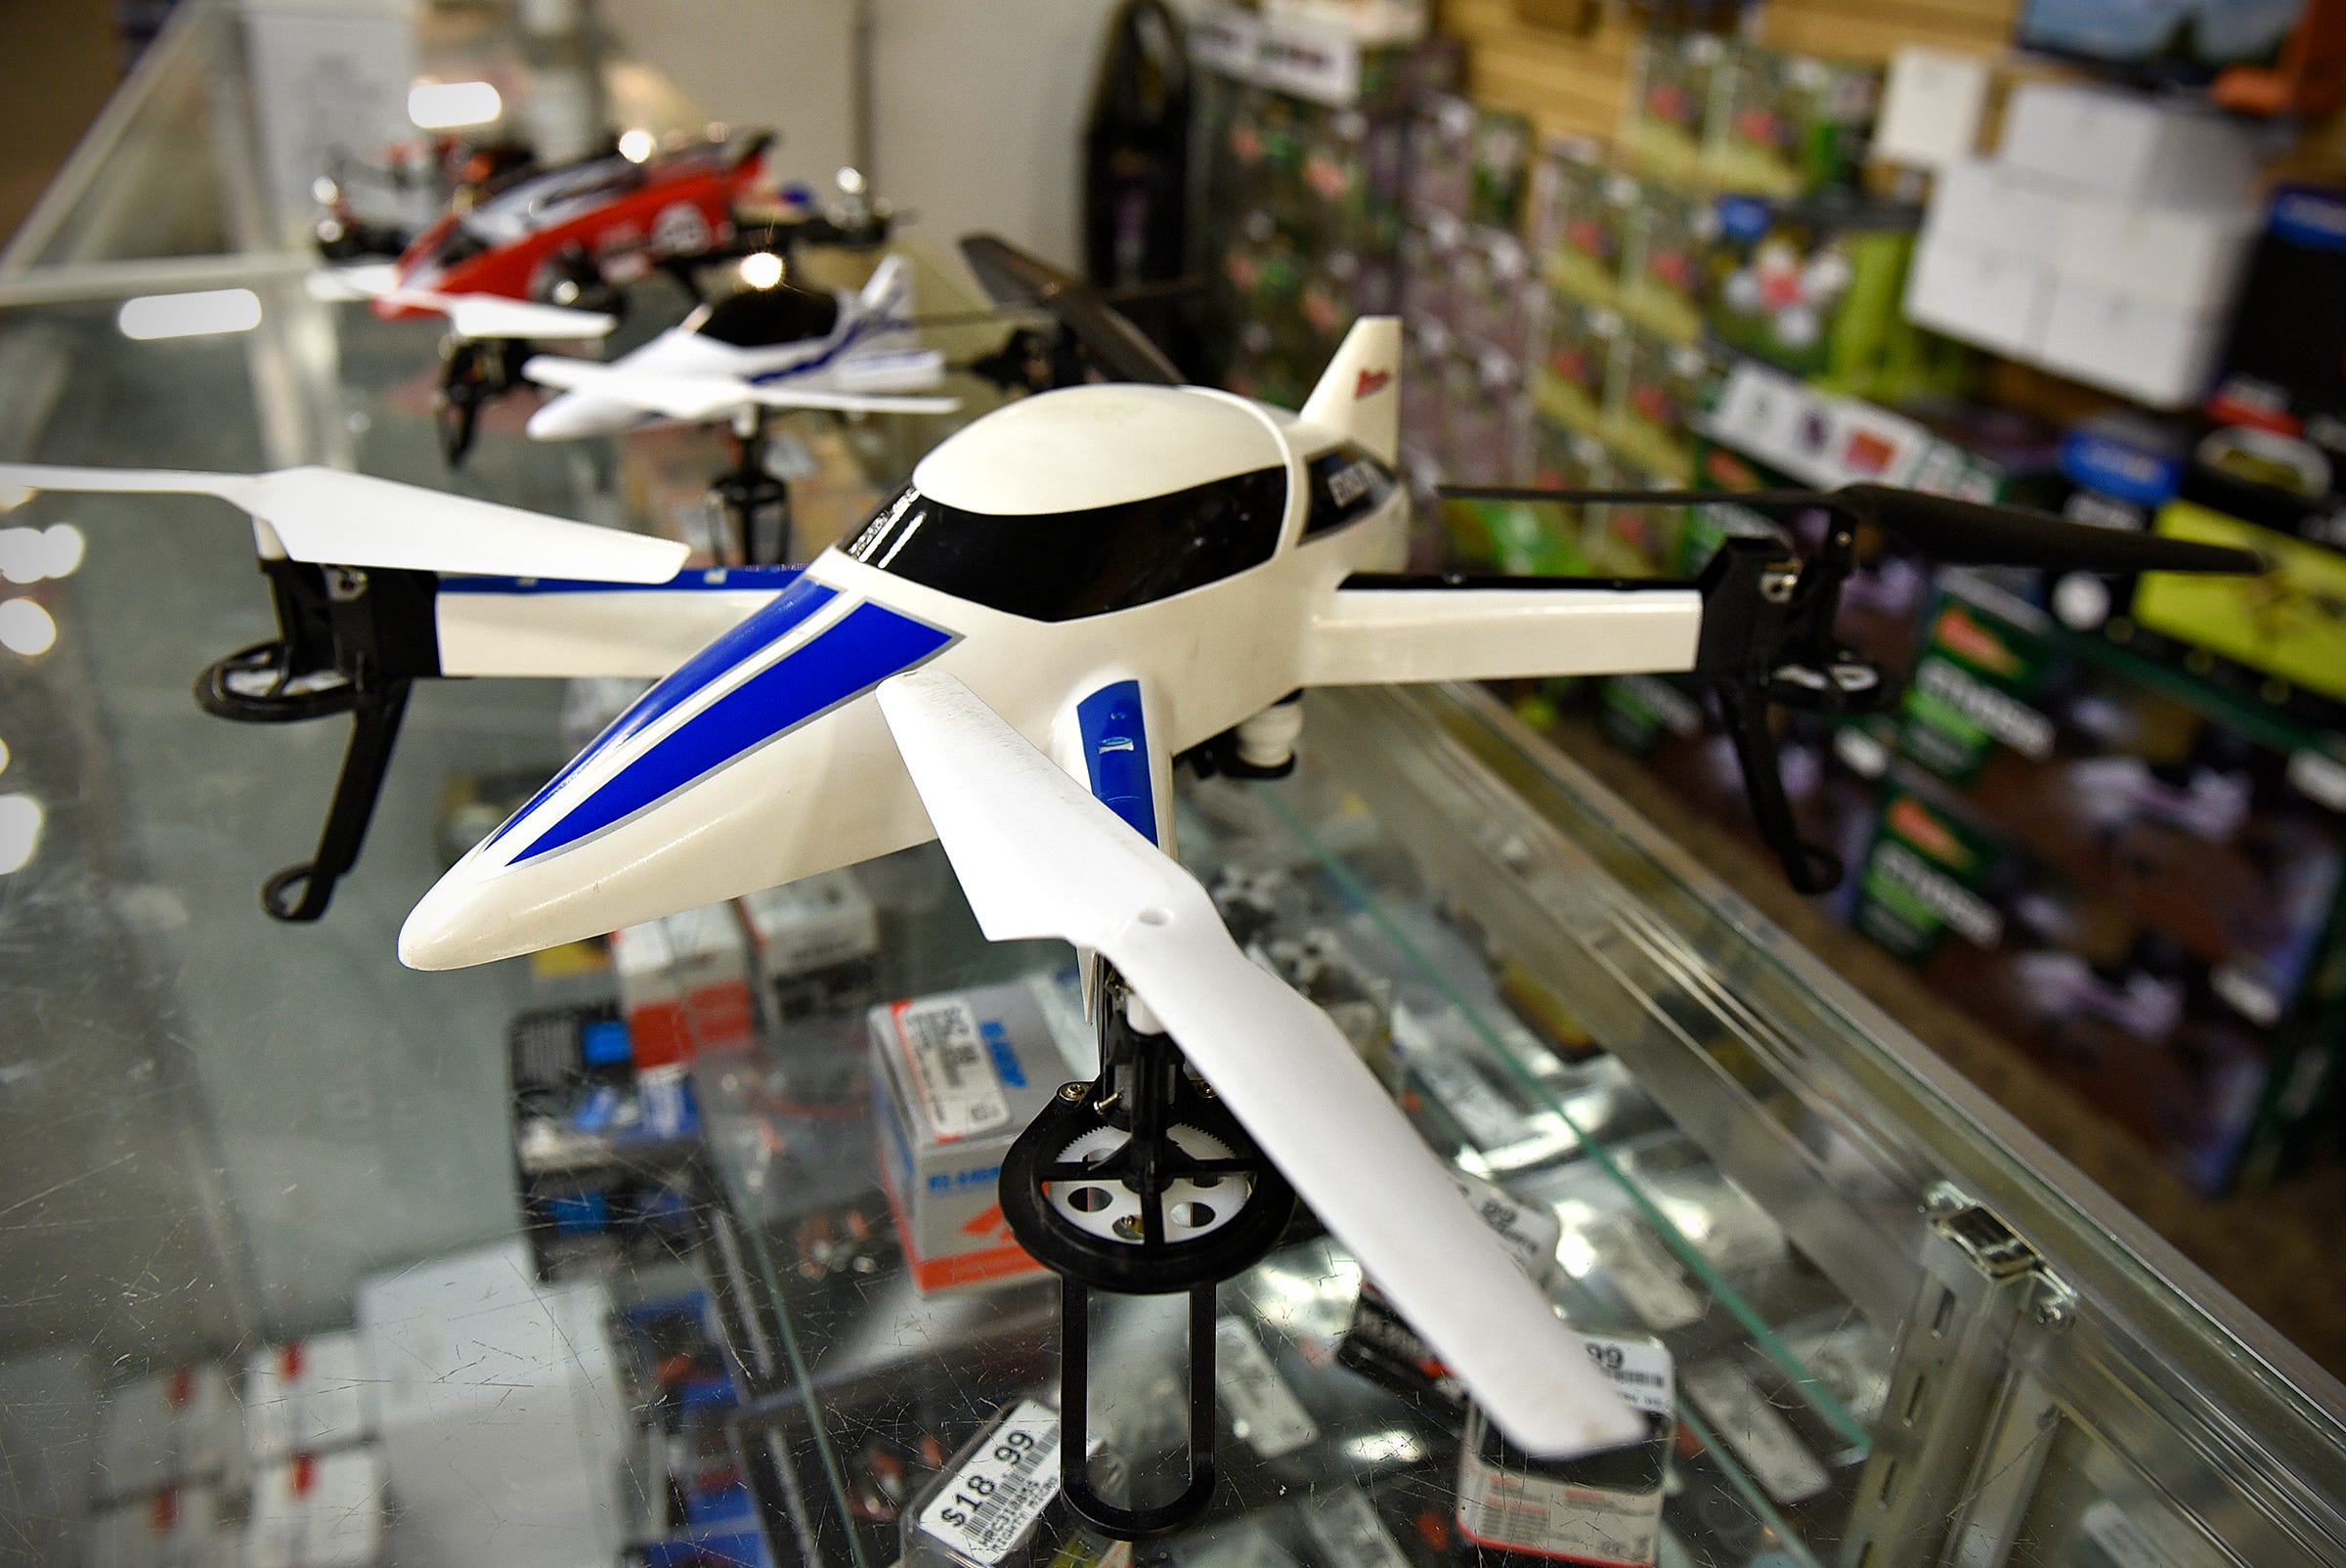 hobbytown drones